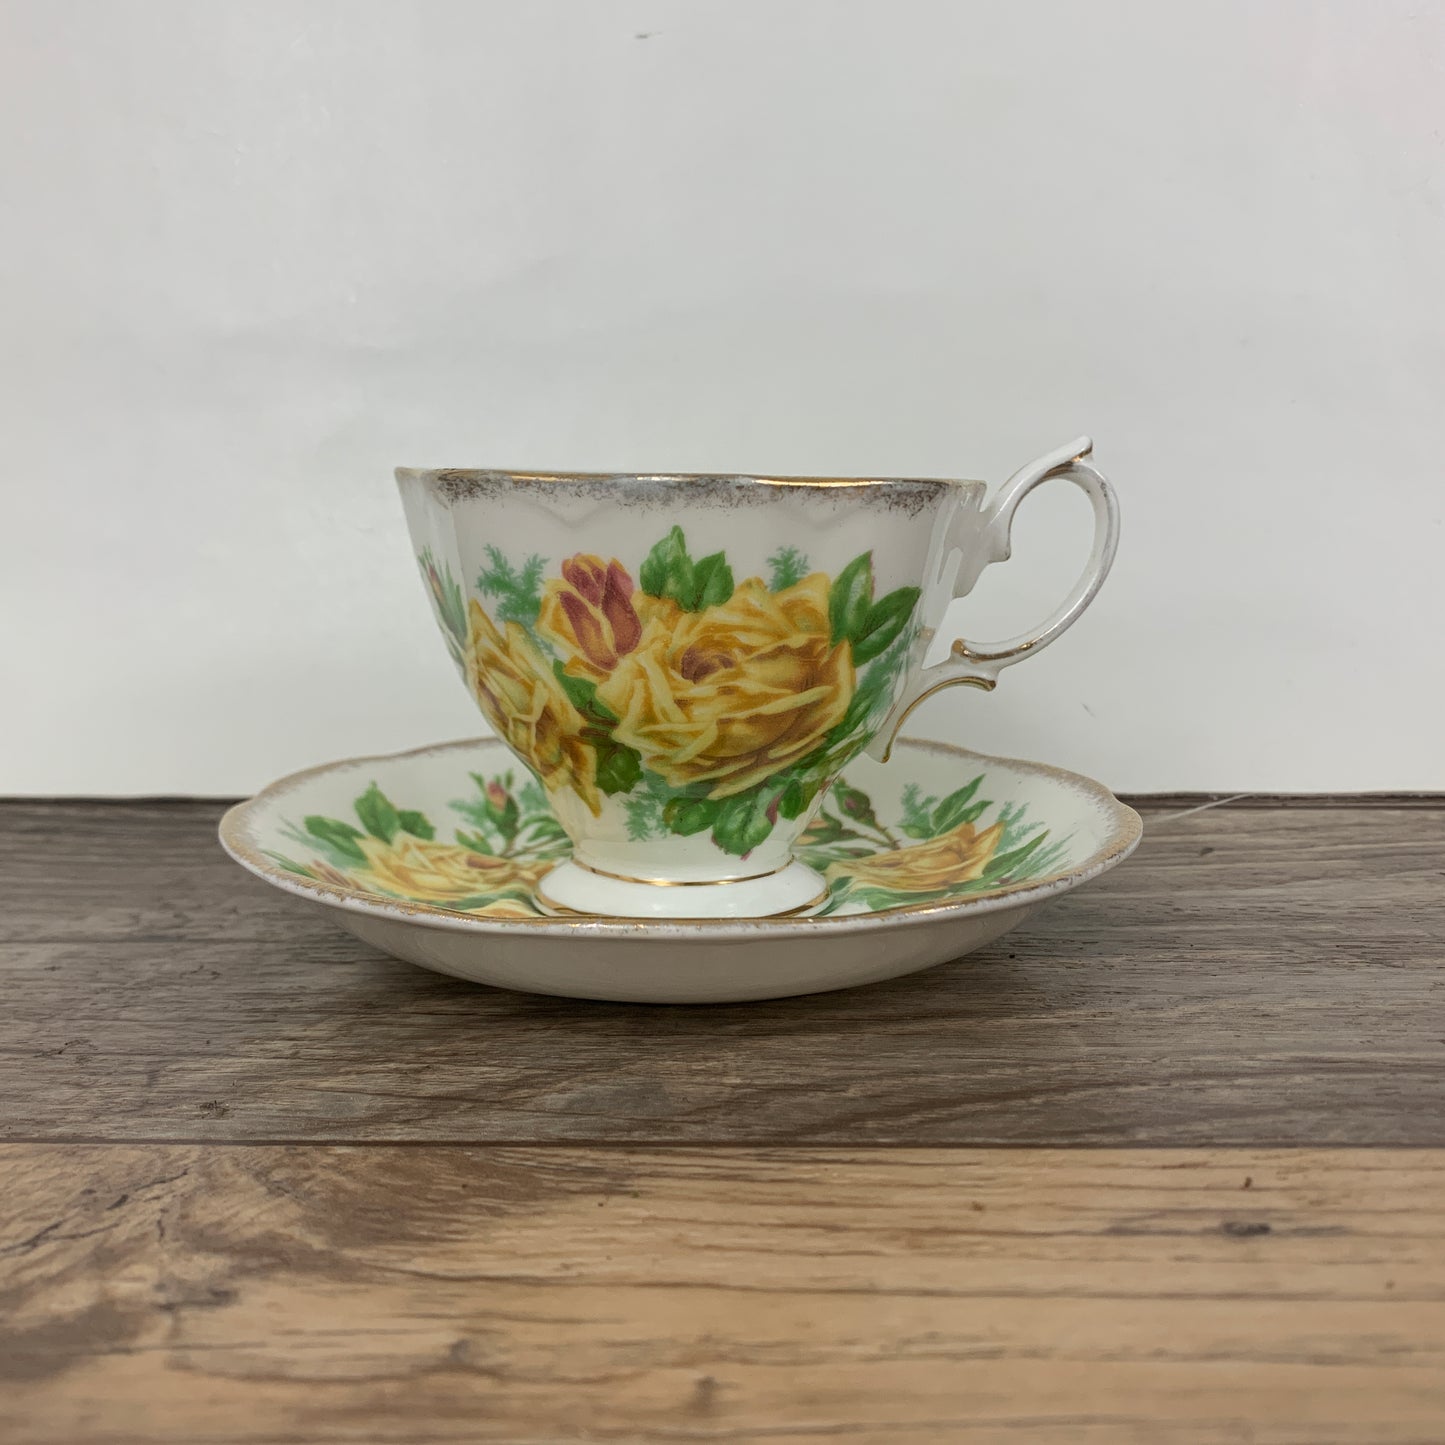 Vintage Royal Albert Tea Rose Tea Cup with Yellow Roses